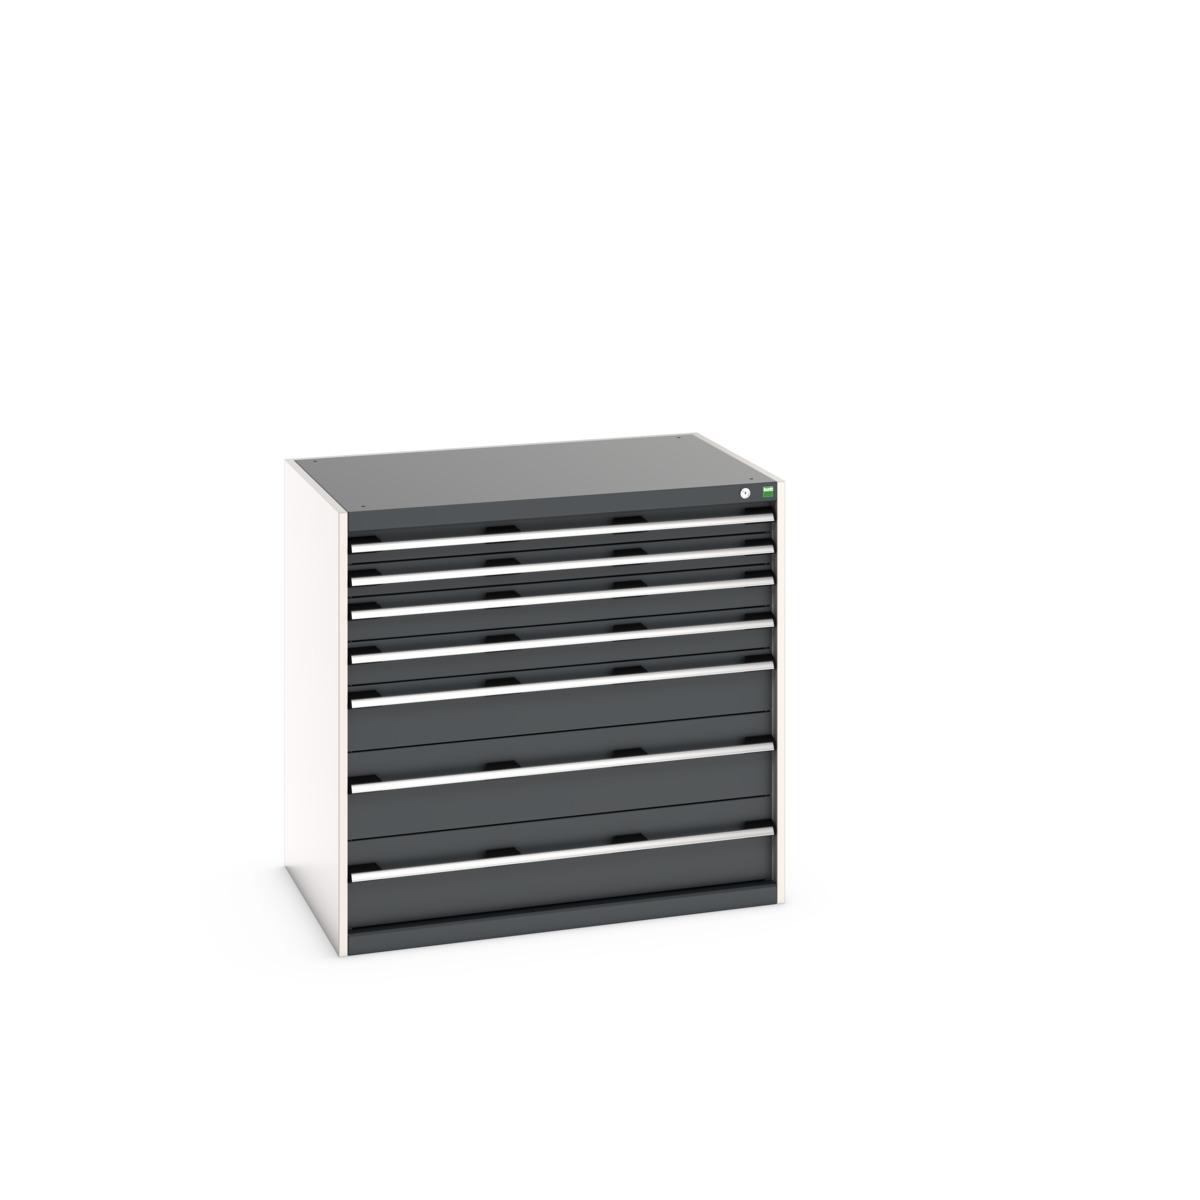 40029021. - cubio drawer cabinet